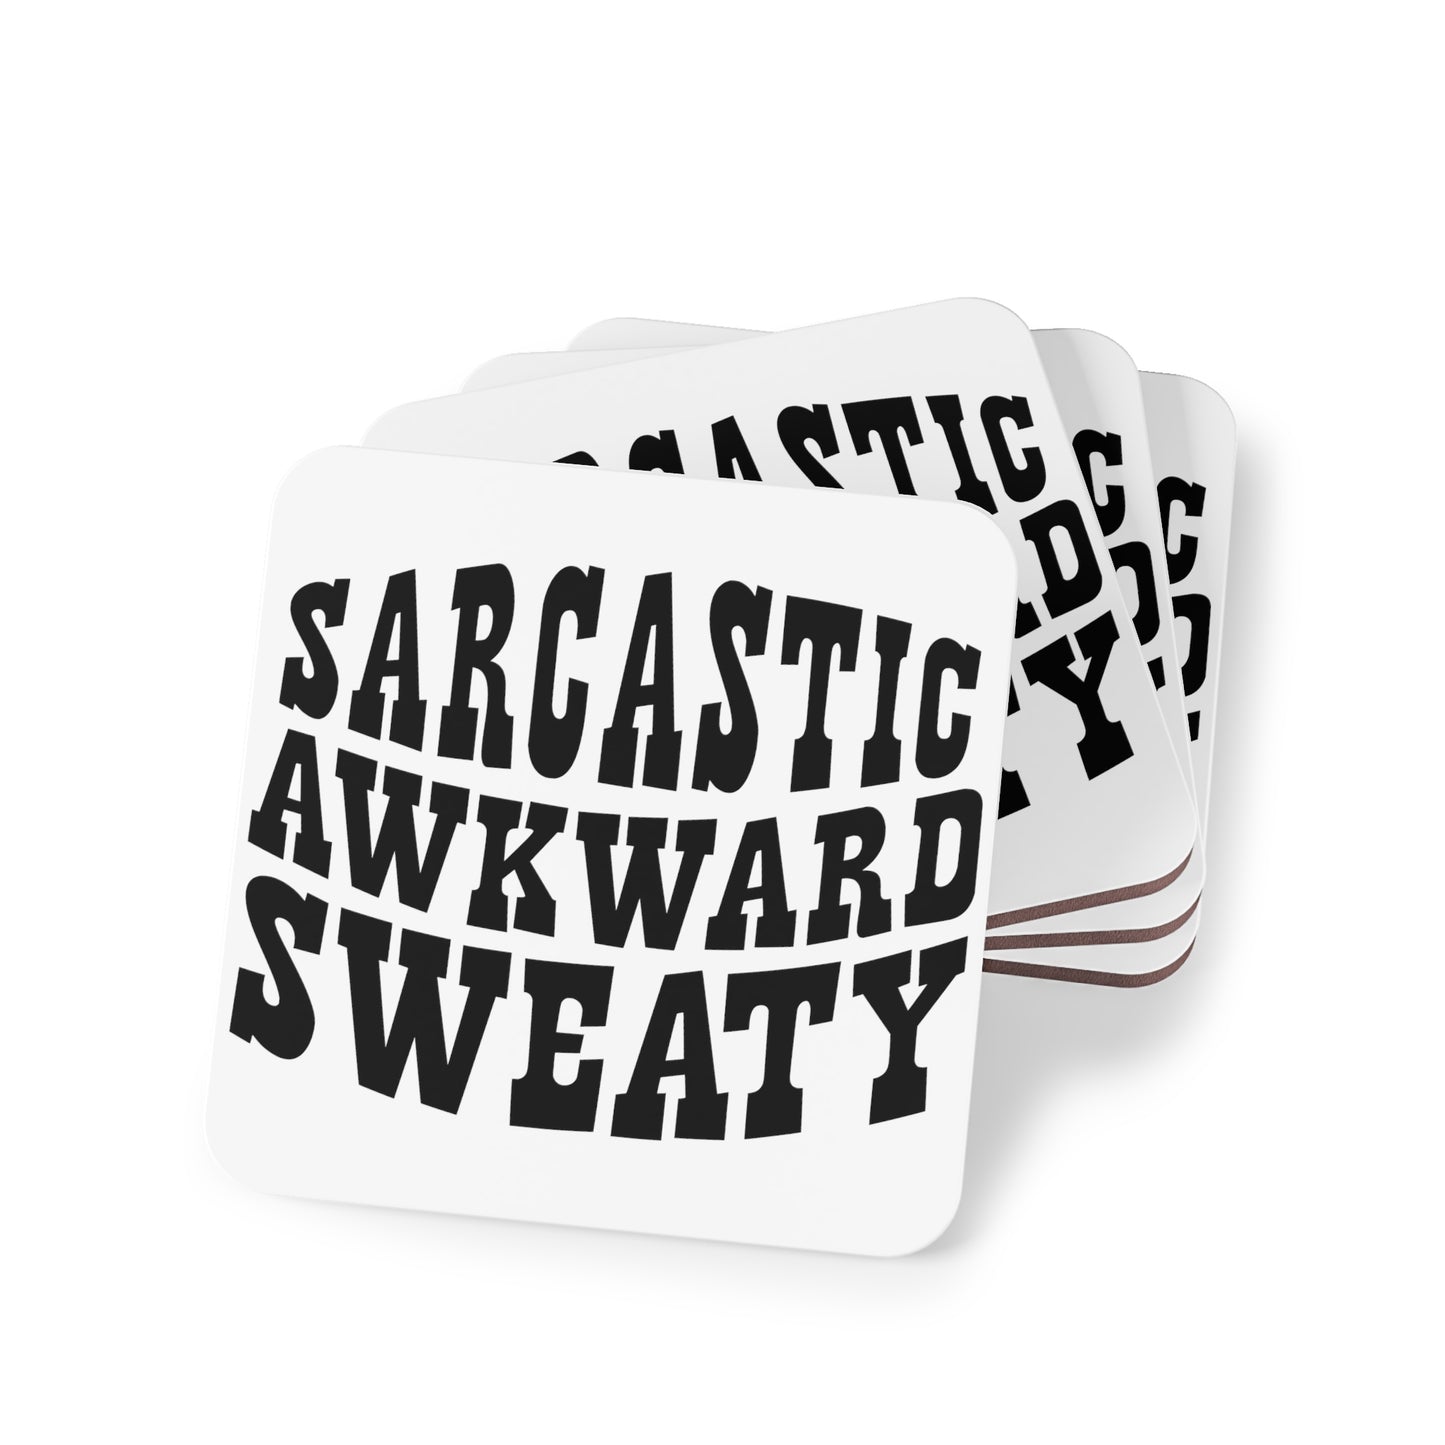 "Sarcastic,Awkward,Sweaty" Square Coasters